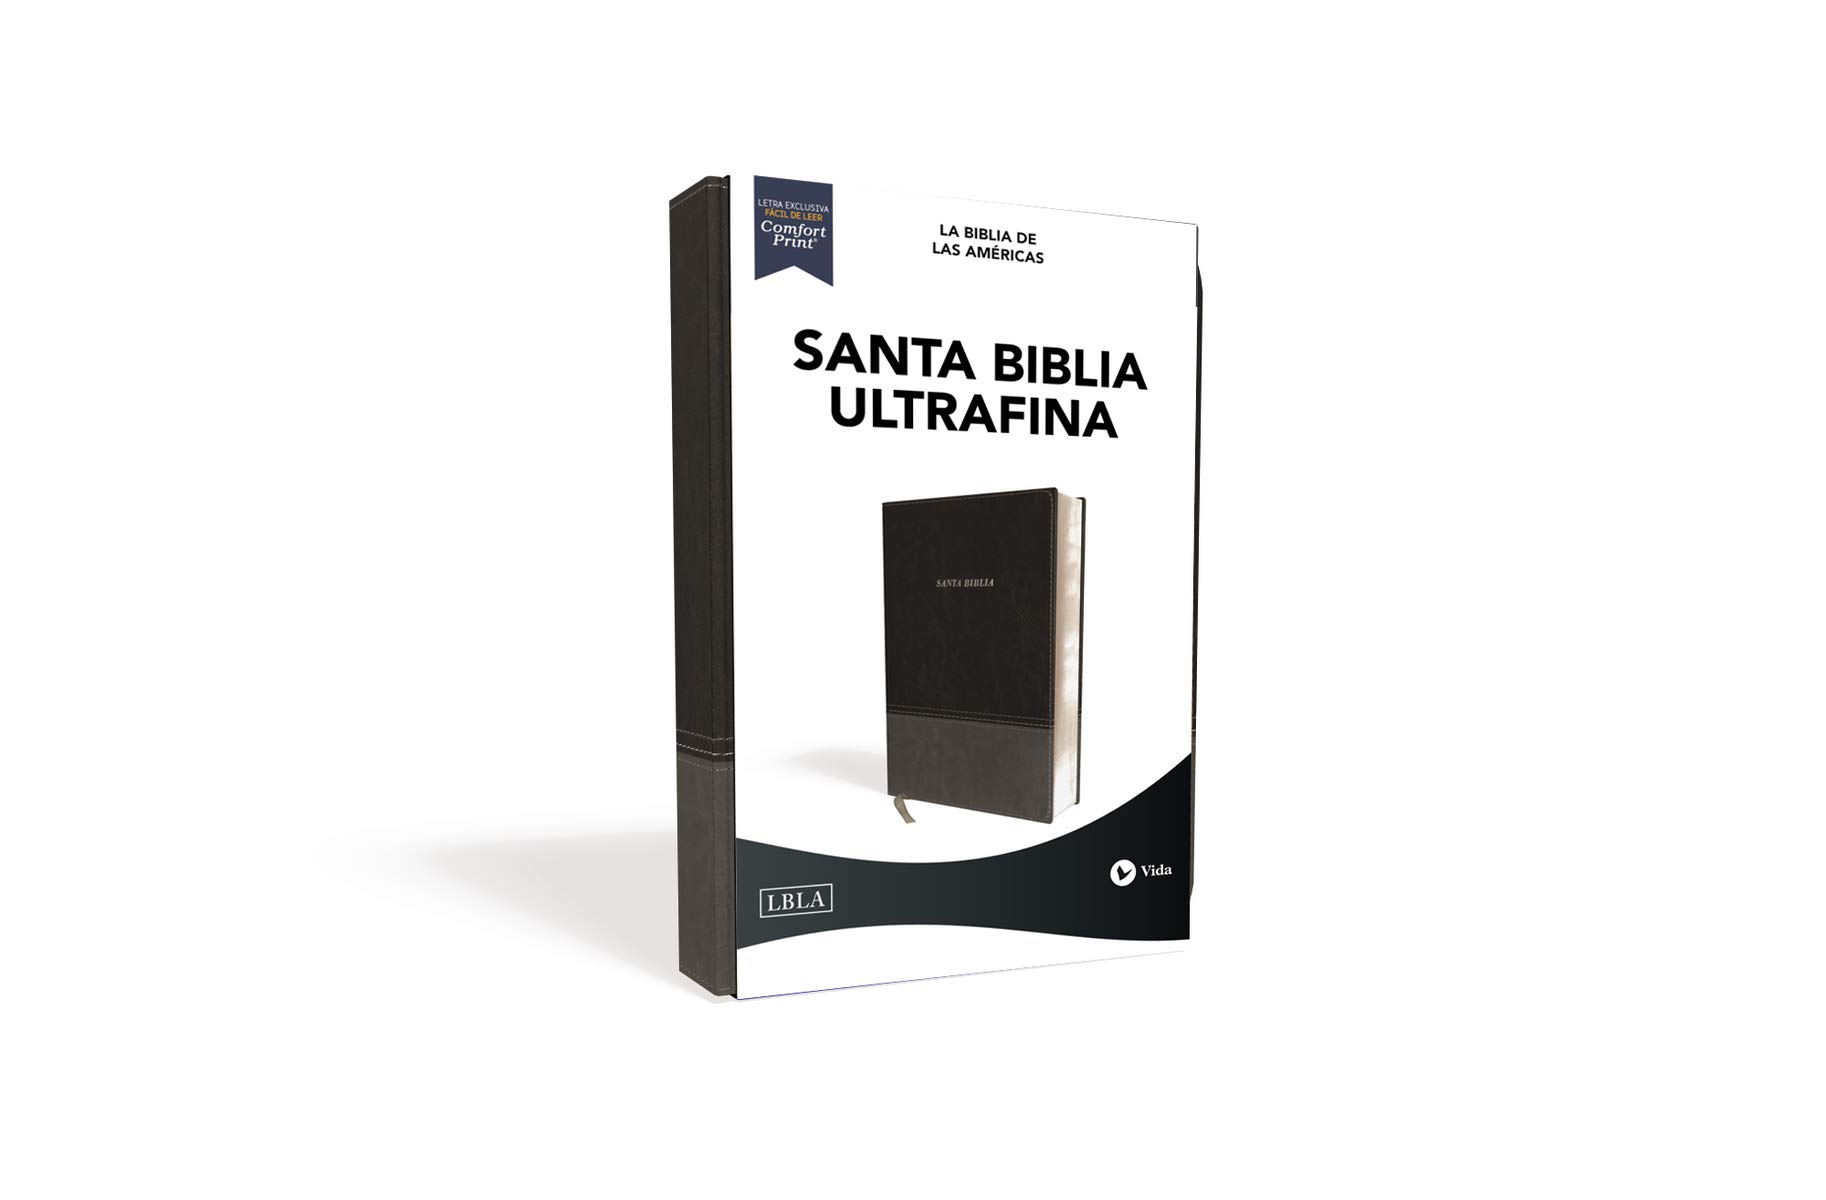 LBLA Santa Biblia Ultrafina, Leathersoft, Negro (Spanish Edition)